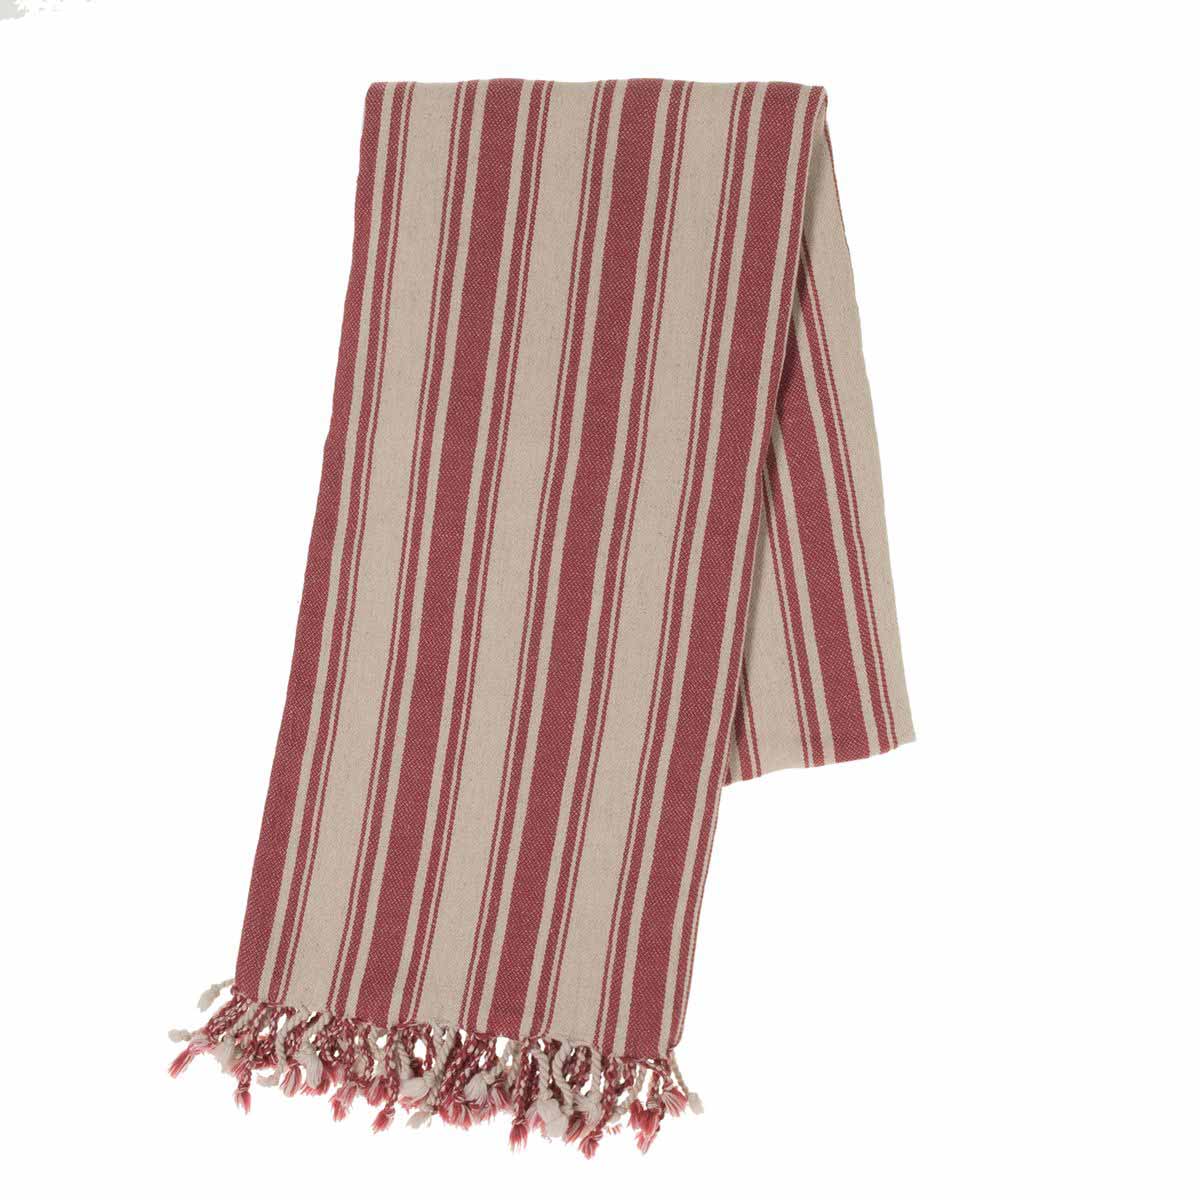 Buldano Turkish Towel - Verti Stripes Rose